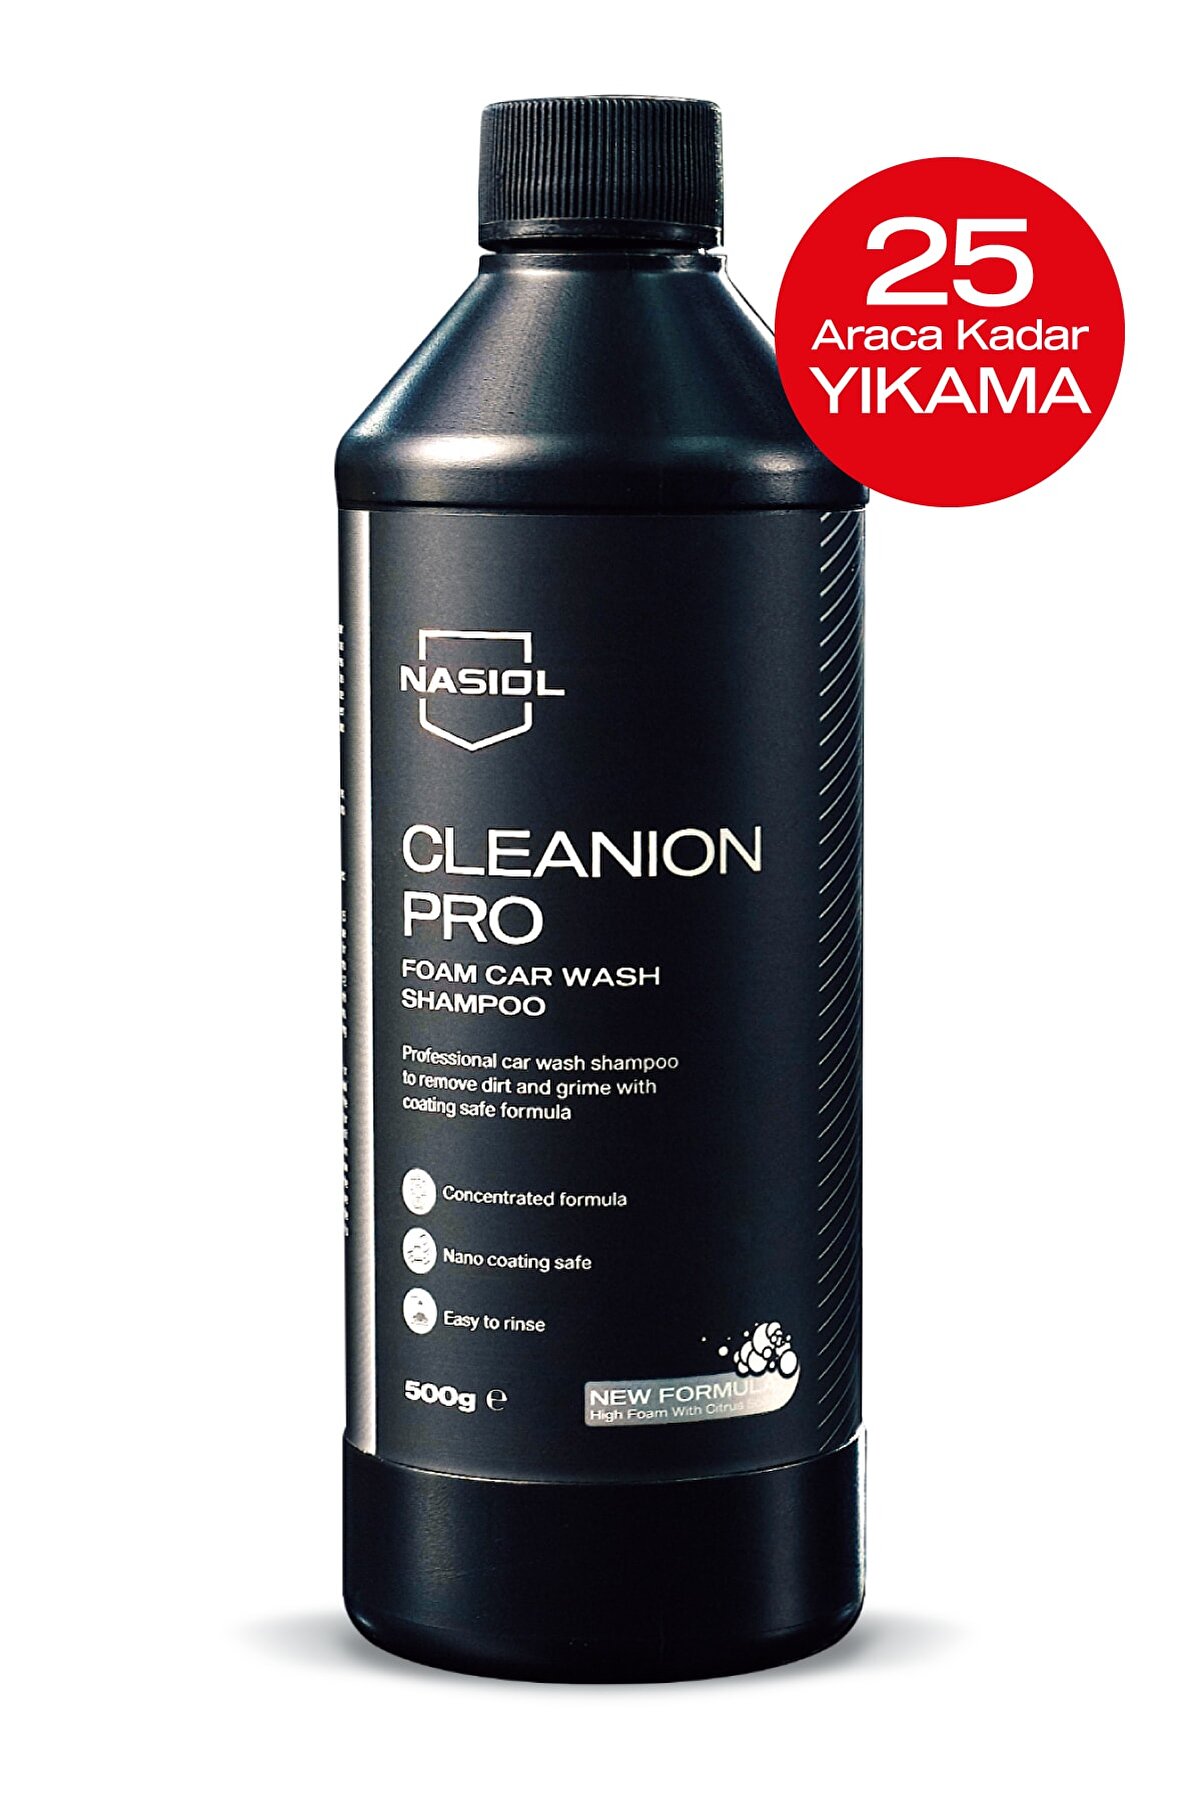 Nasiol Cleanion Pro New Formula Araç Konsantre Şampuan-500 Gr-Narenciye Kokulu Fırçasız Oto Yıkama